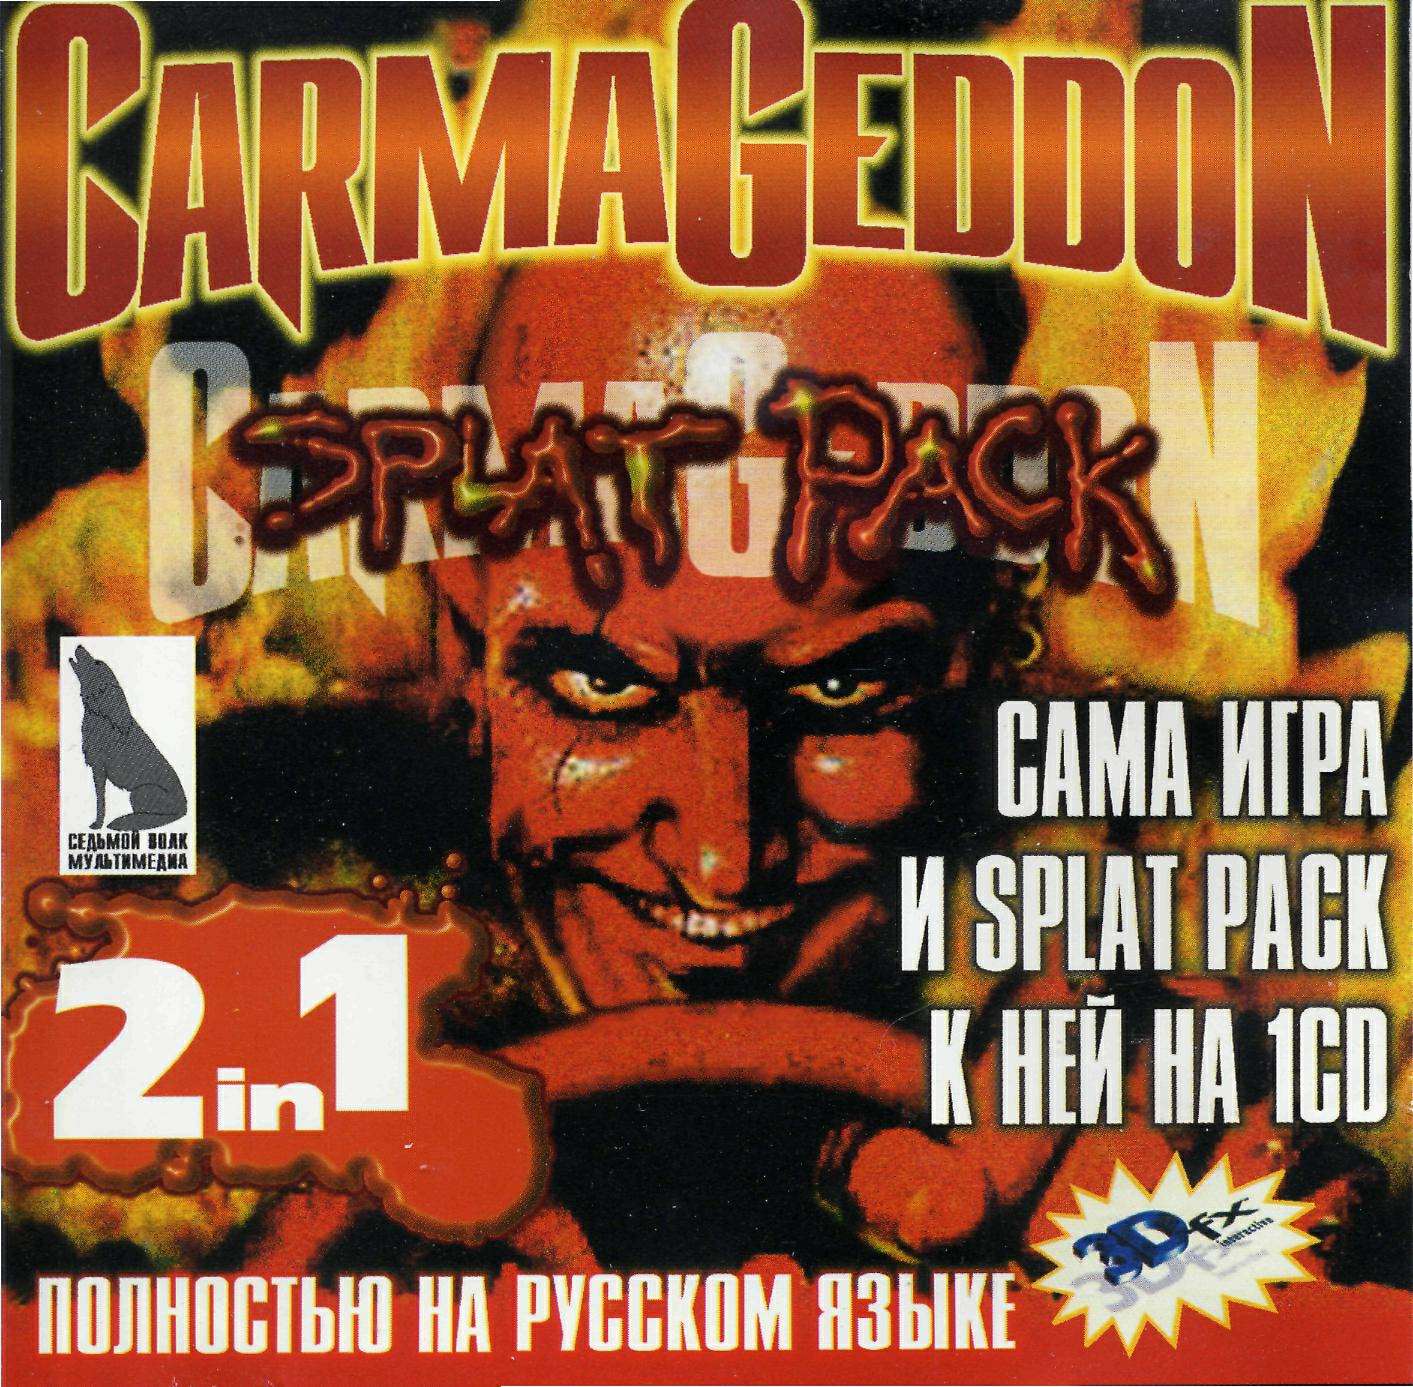 Carmageddon & Splat Pack